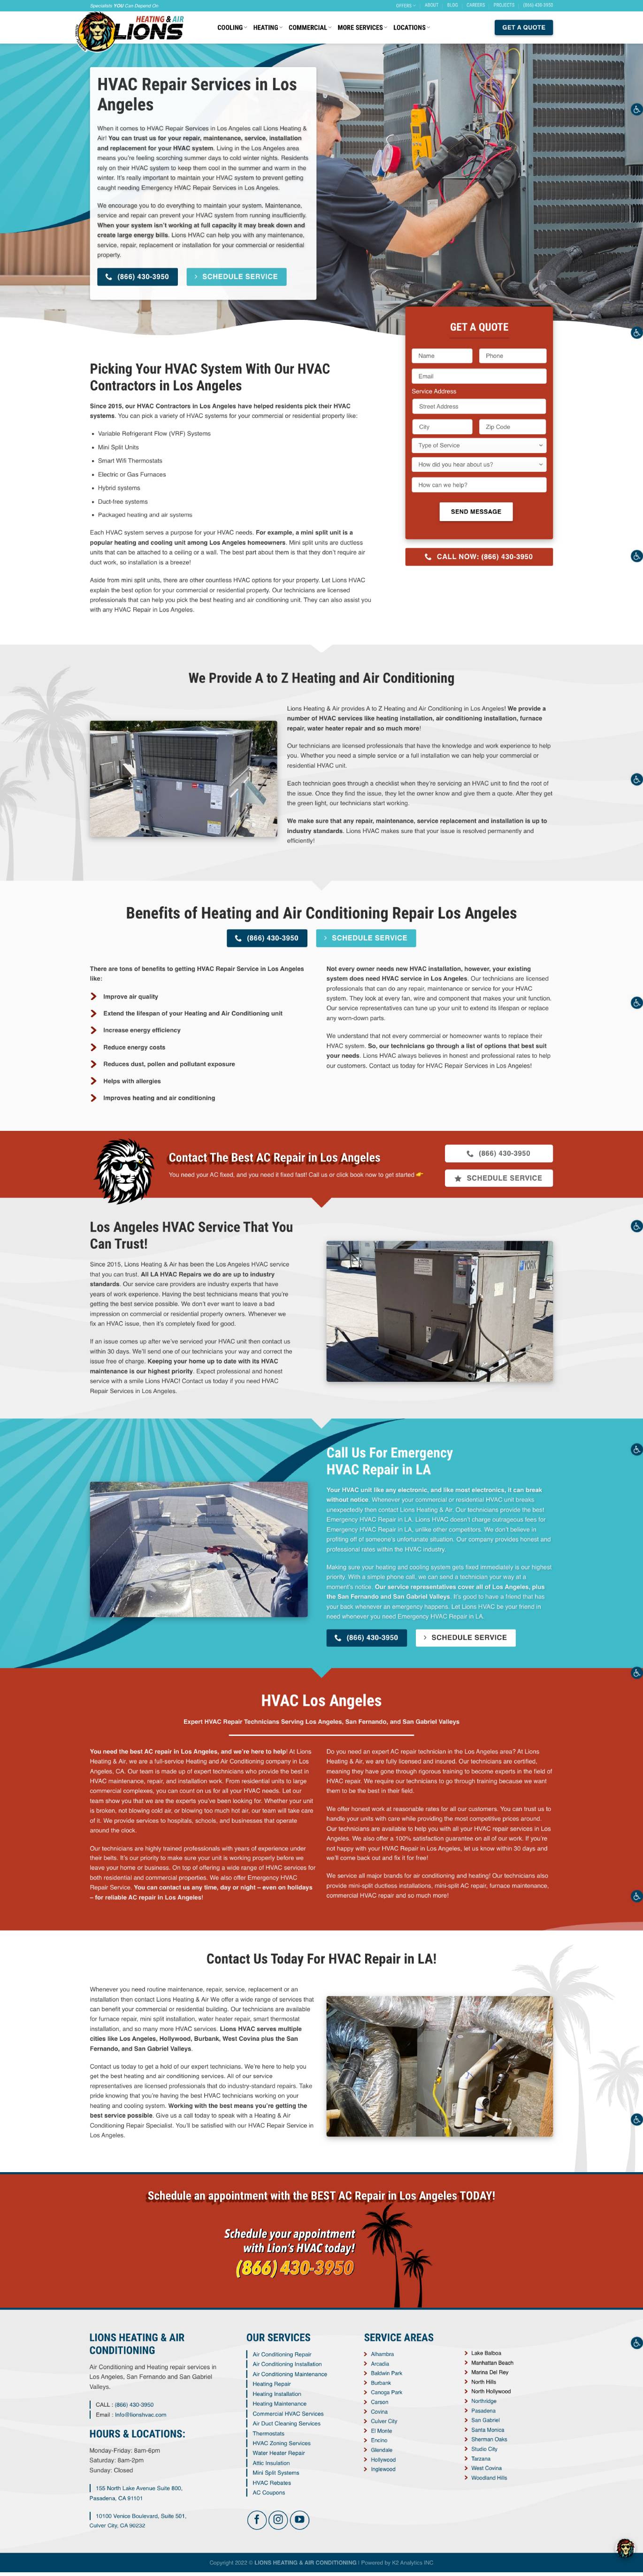 HVAC Company Web Design & SEO Services